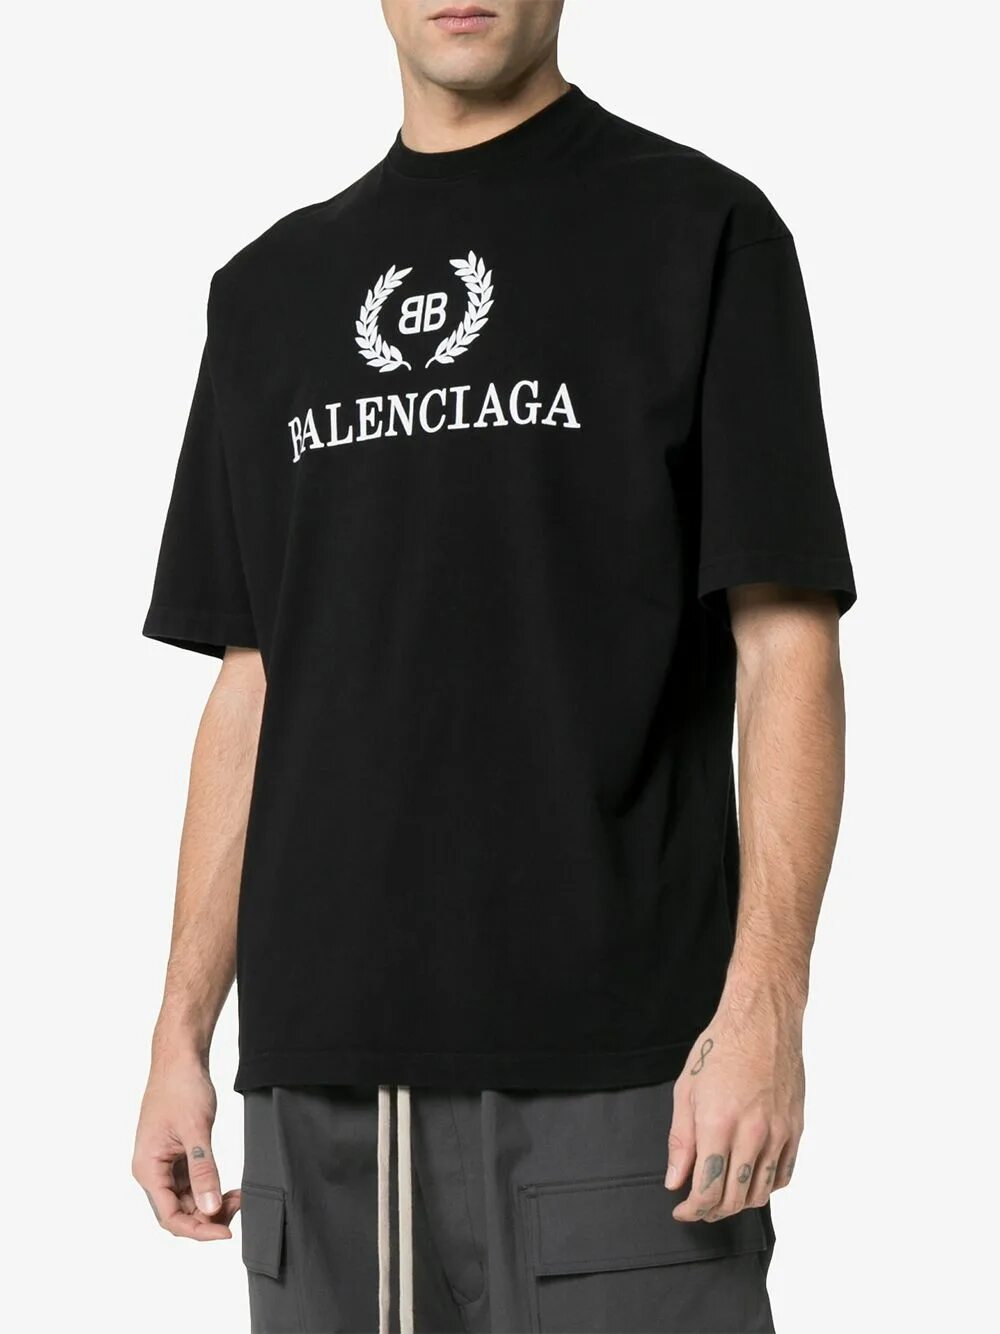 Balenciaga t-Shirt logo. Черная футболка Баленсиага. Balenciaga t Shirt ss22. Balenciaga футболка черная.